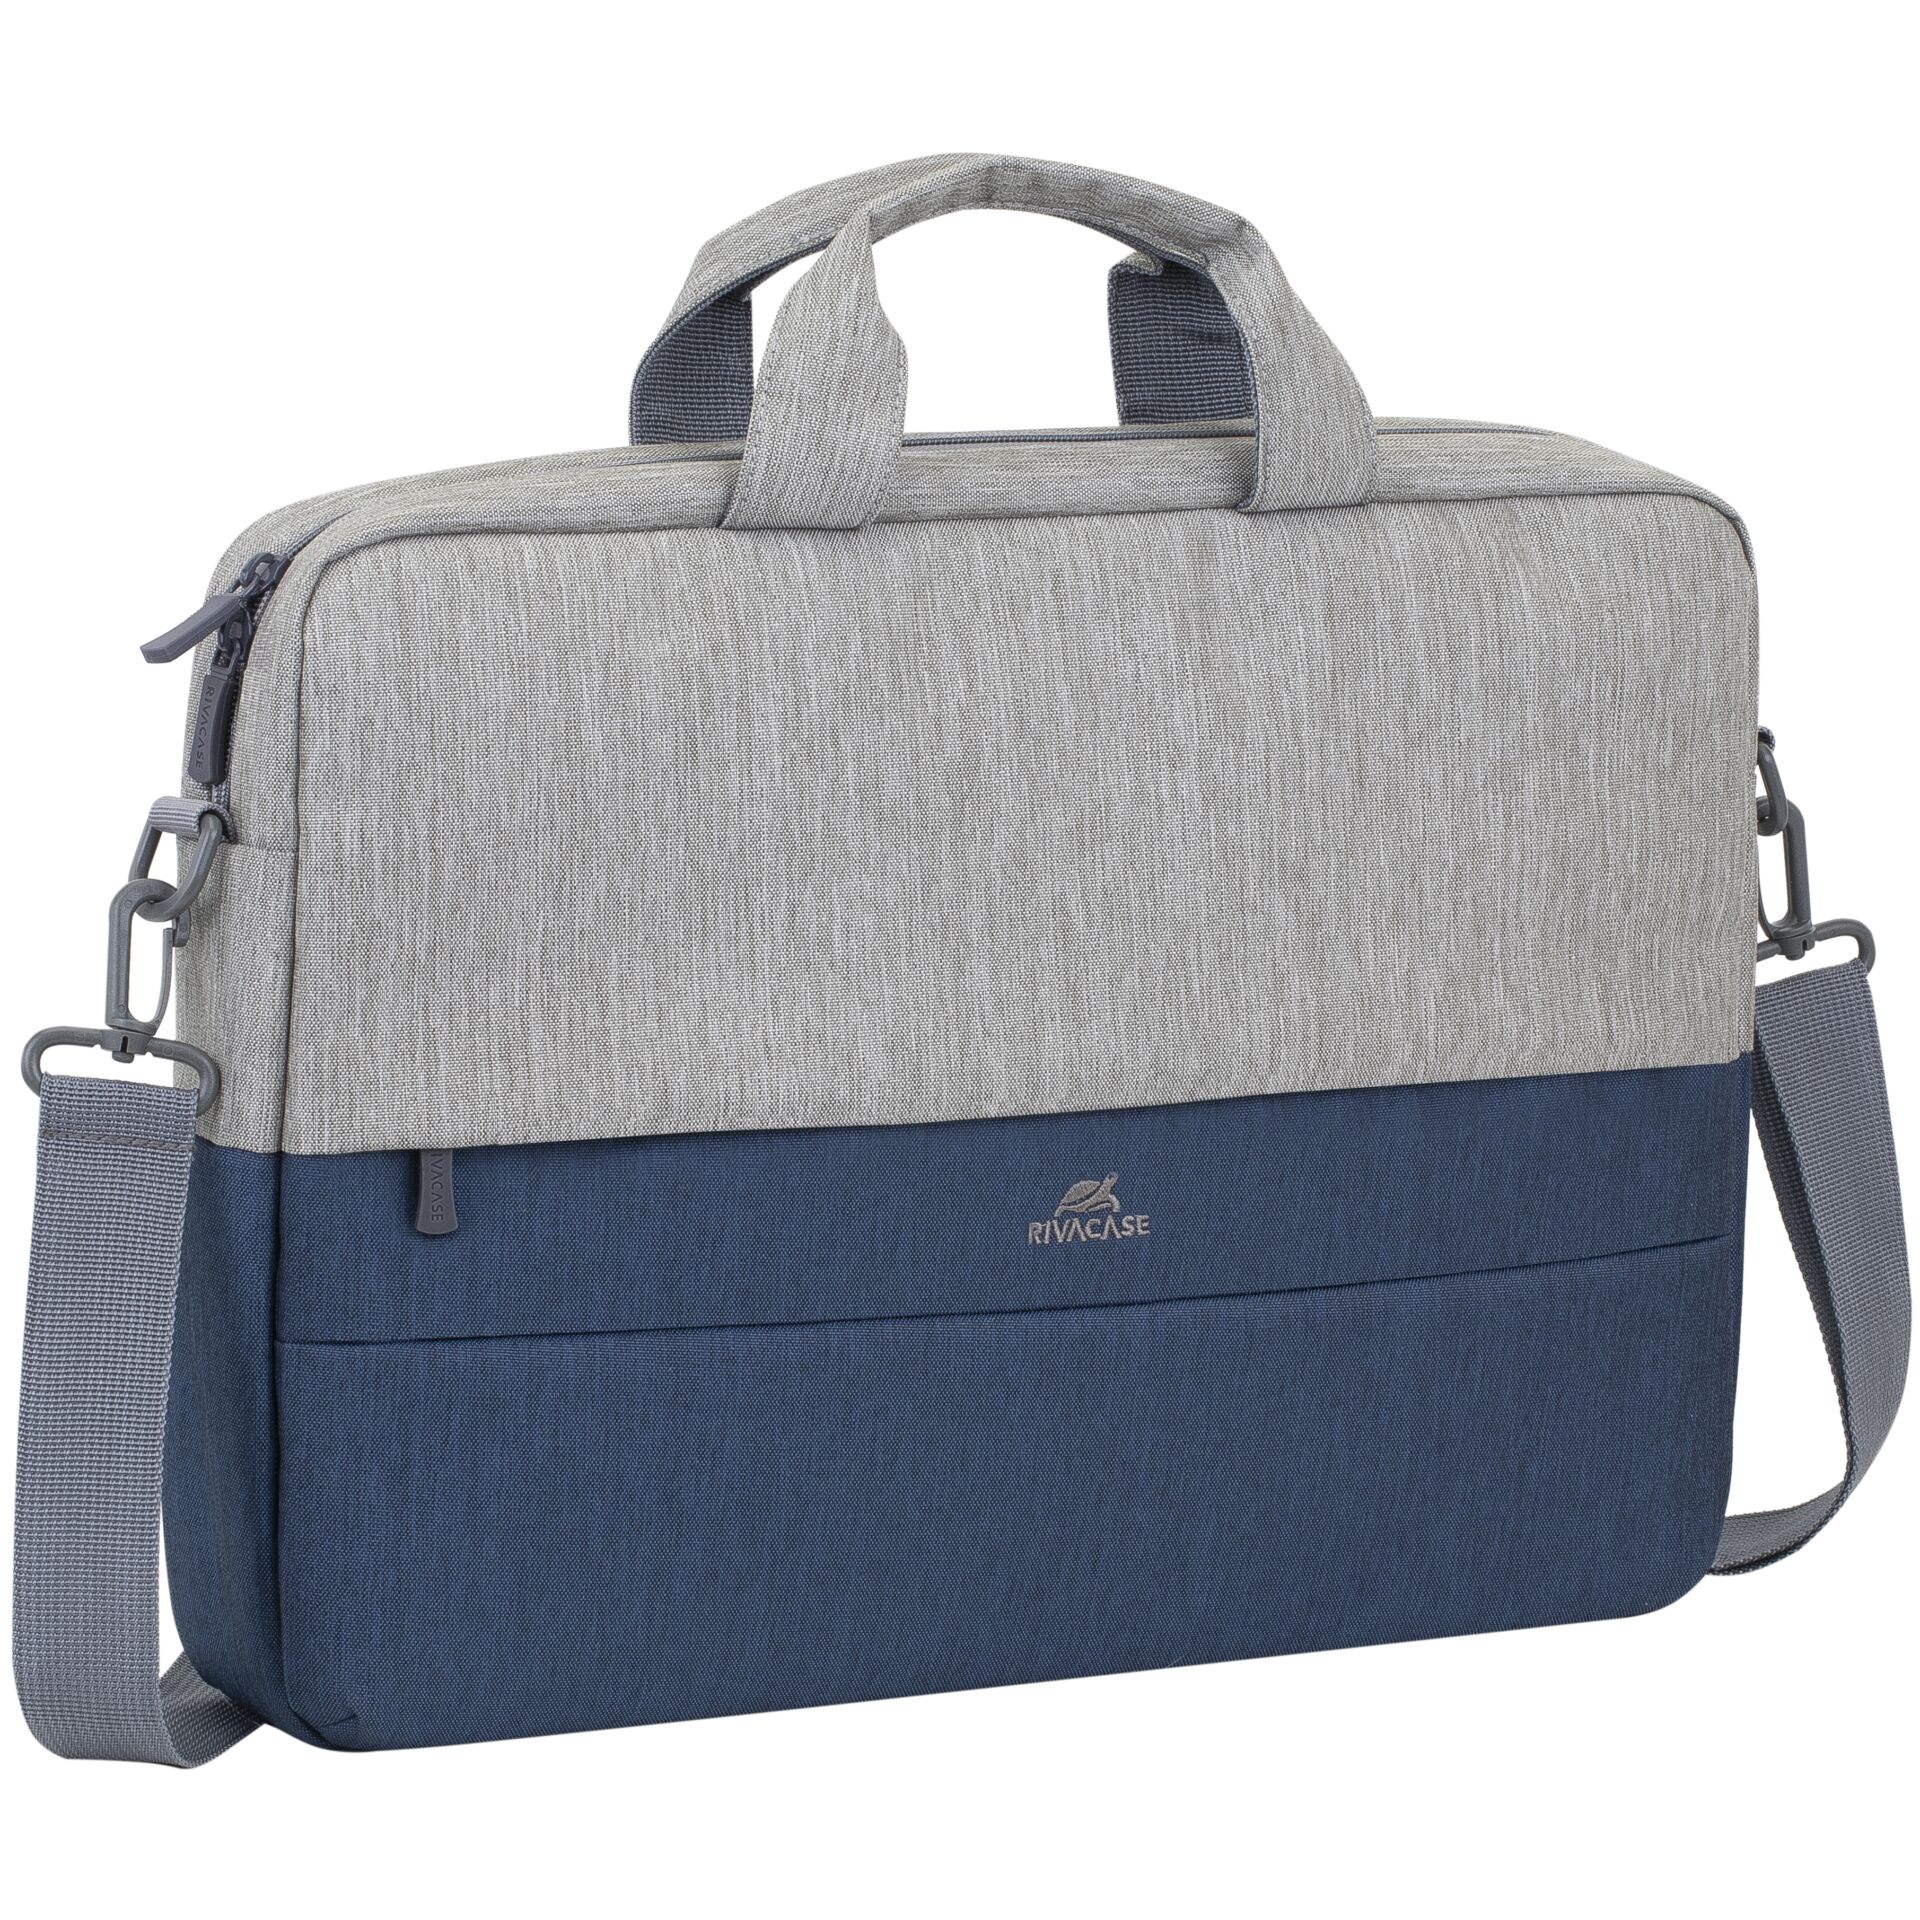 Rivacase 7532 Laptop Bag 15.6  grey/dark blue